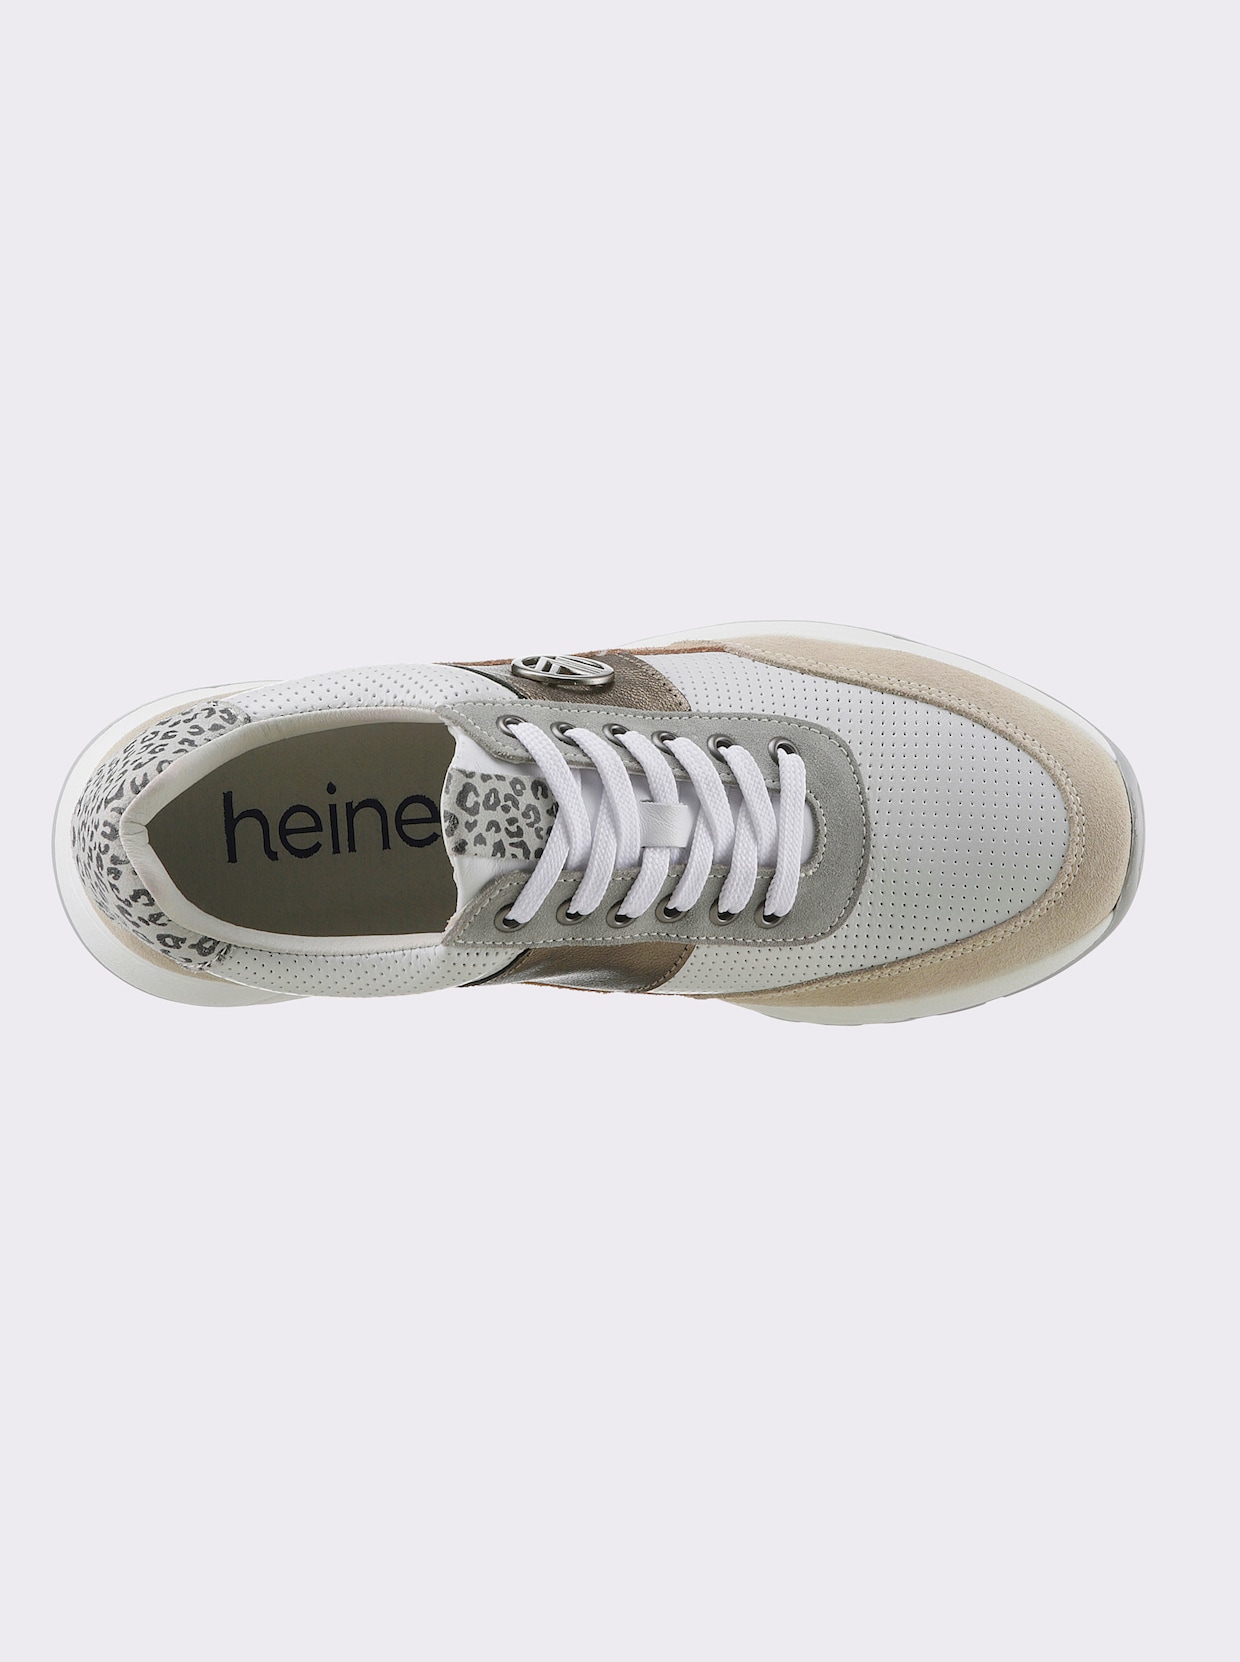 heine Sneaker - wit/taupe